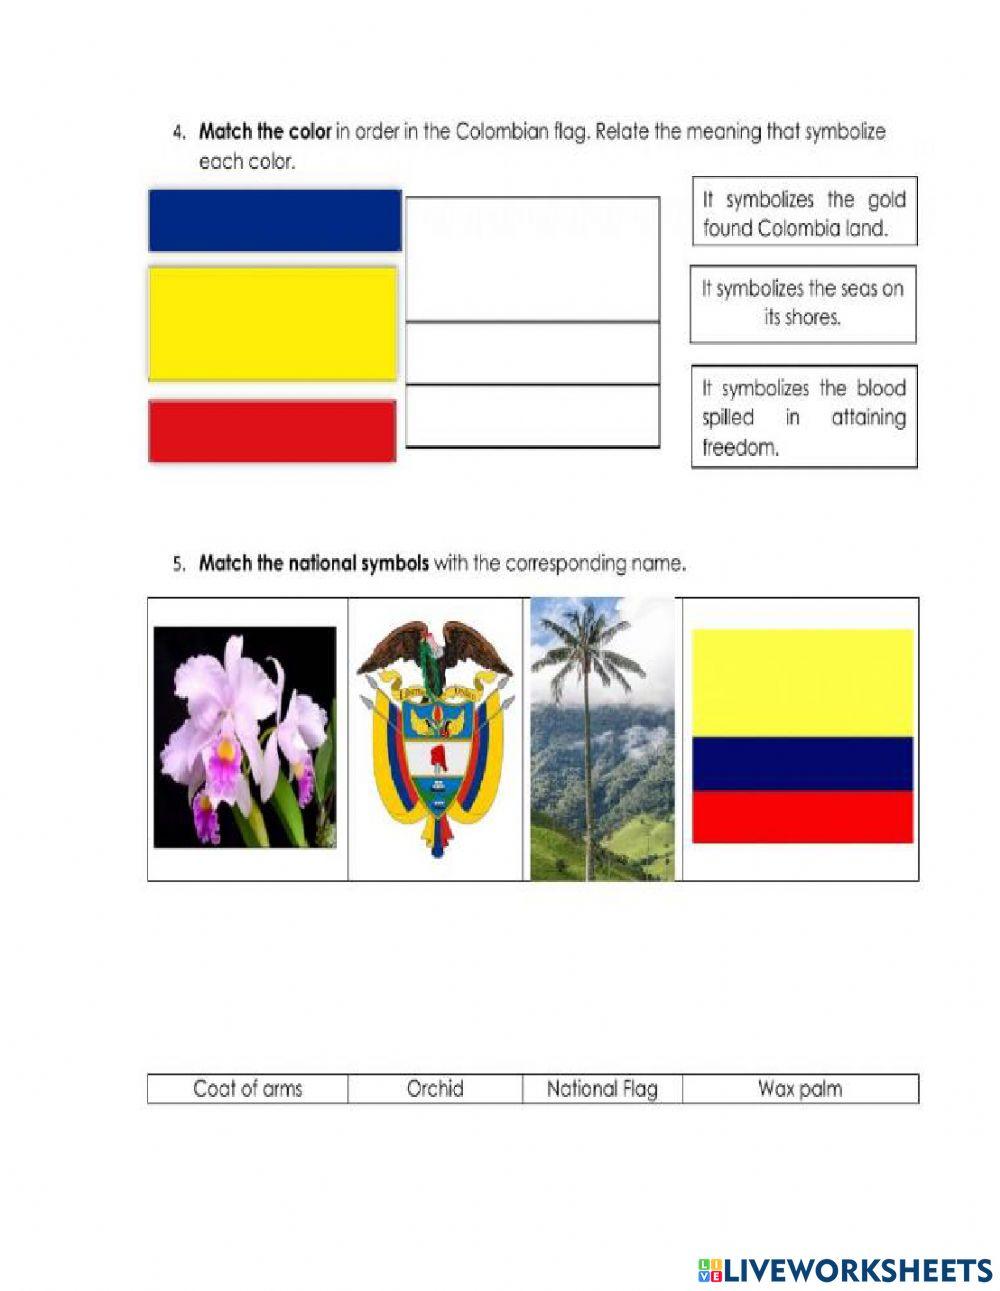 Colombian symbols